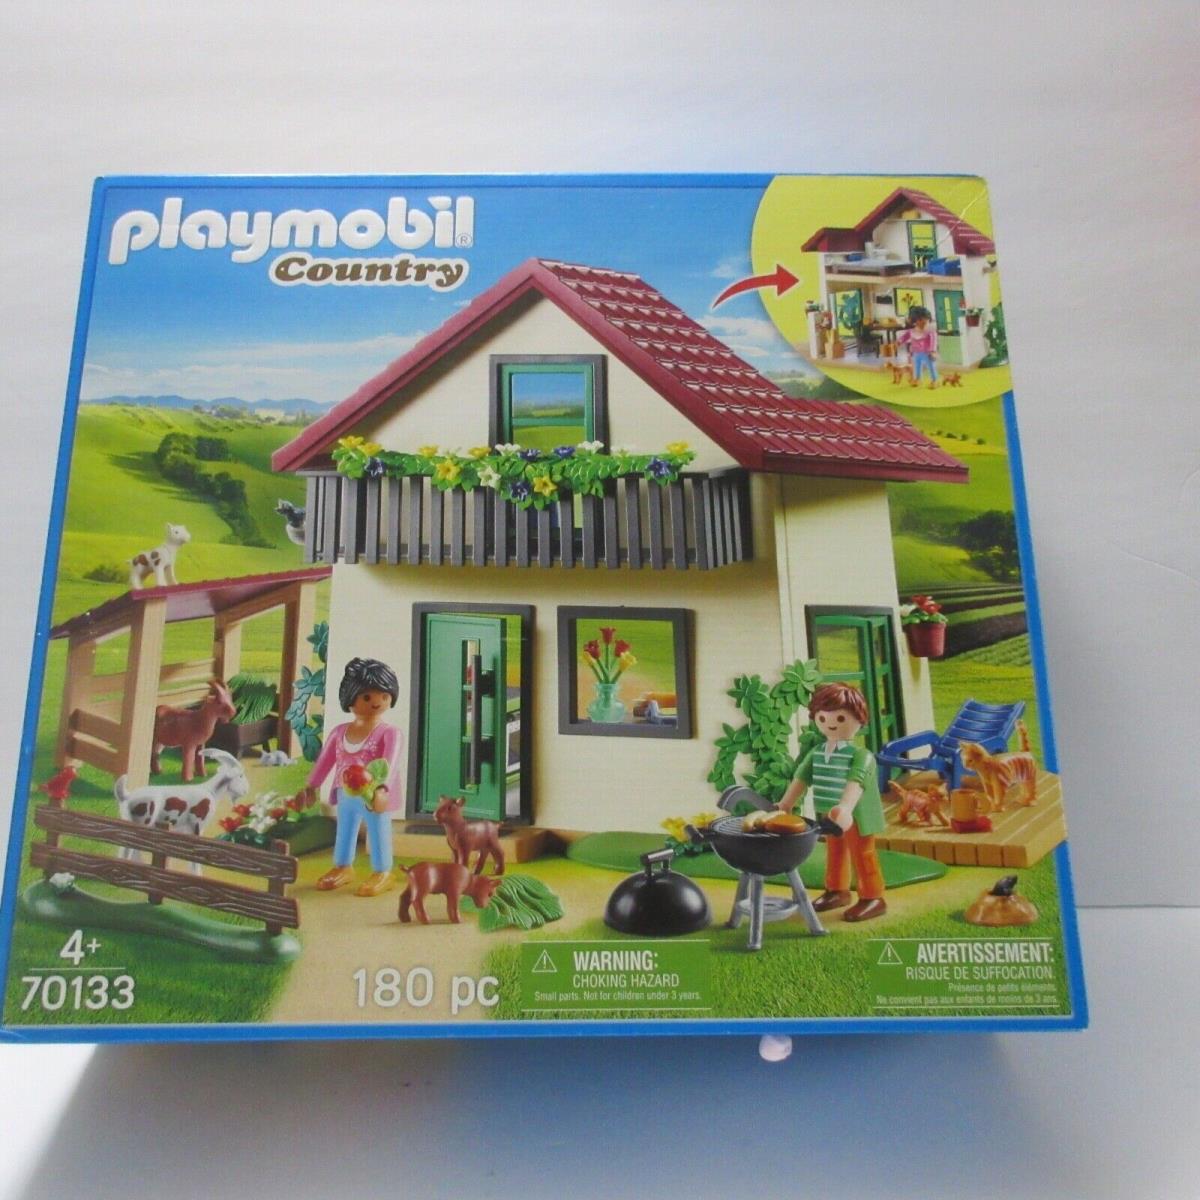 Playmobil Country 70133 Modern Farmhouse 180 Piece Toy Playset